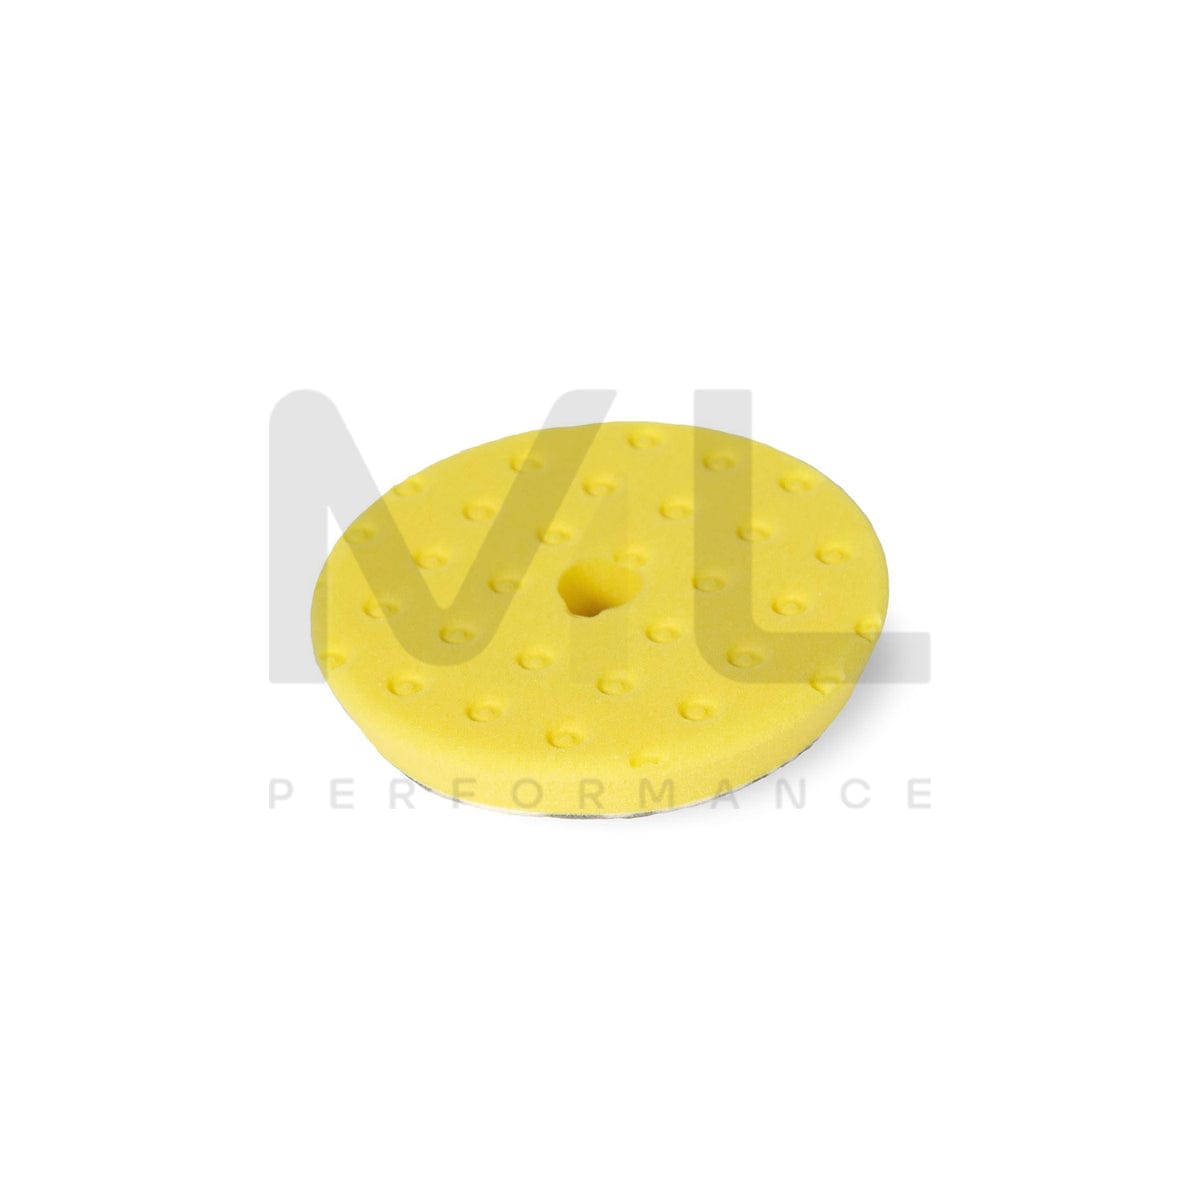 Turtle Wax Yellow Cutting Foam Pad Featuring Ccs Technology